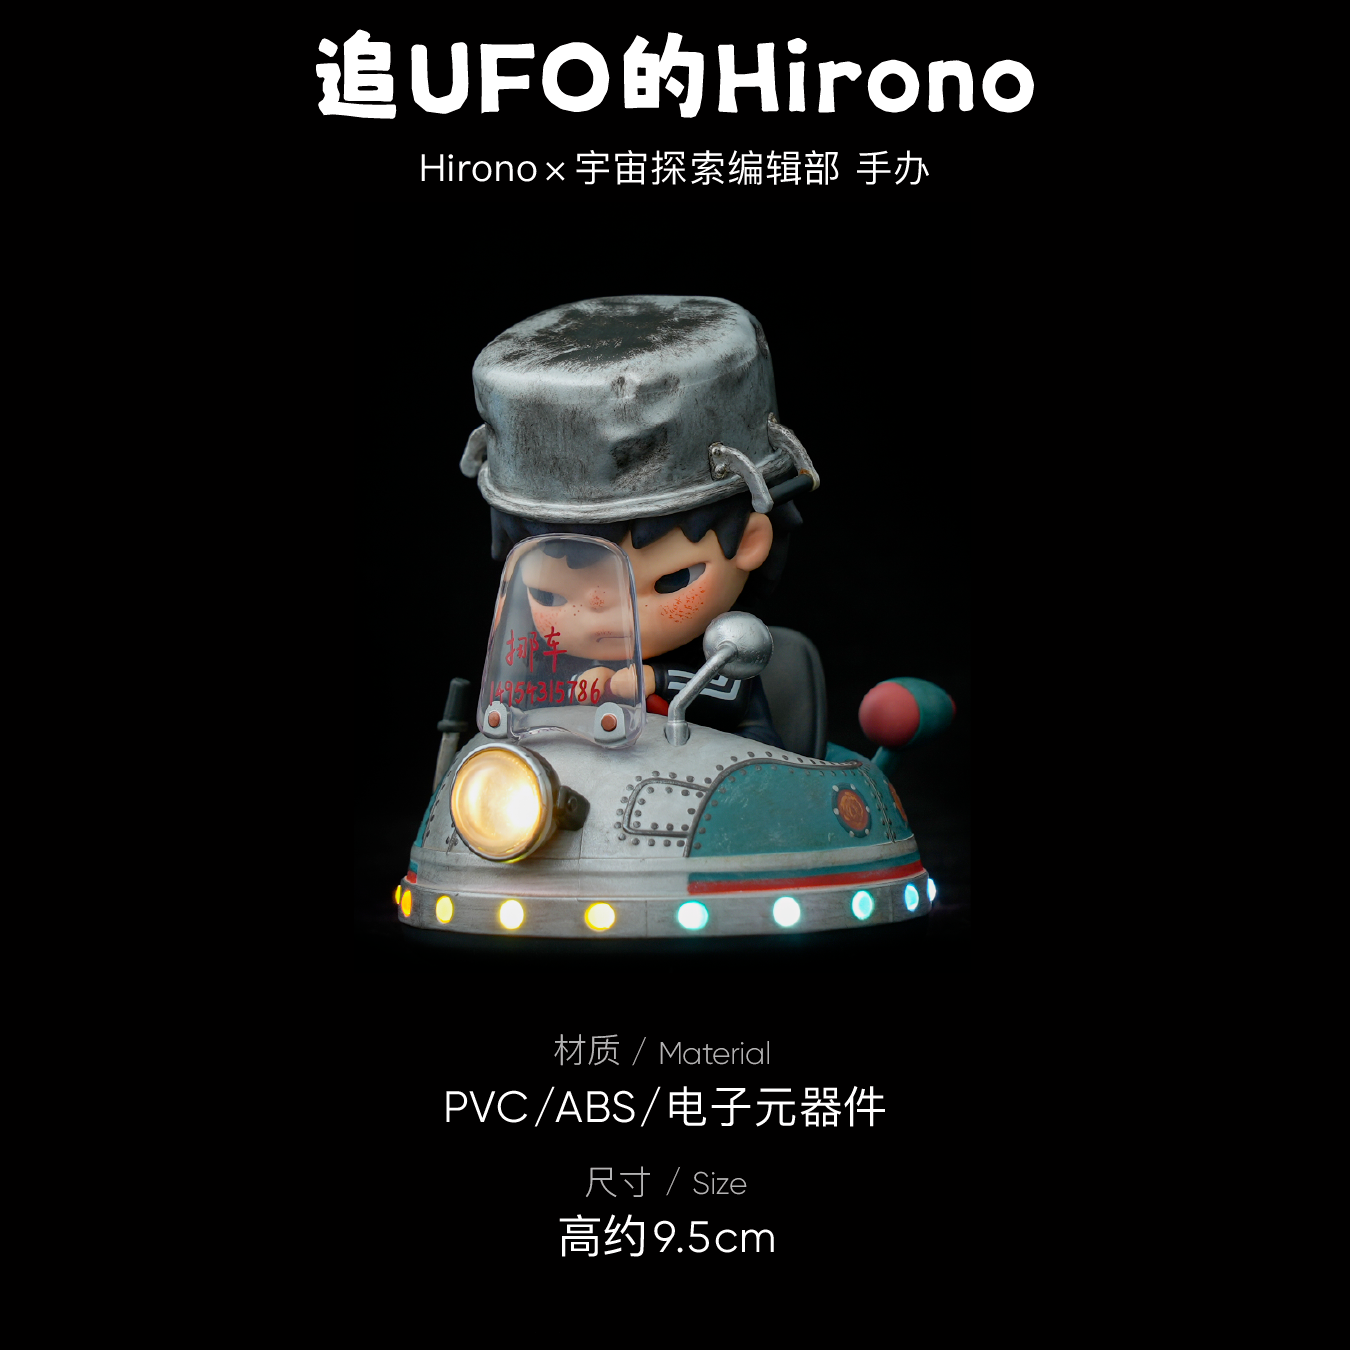 Hirono-Chasing UFO's Hirono Figures – Hahatoys